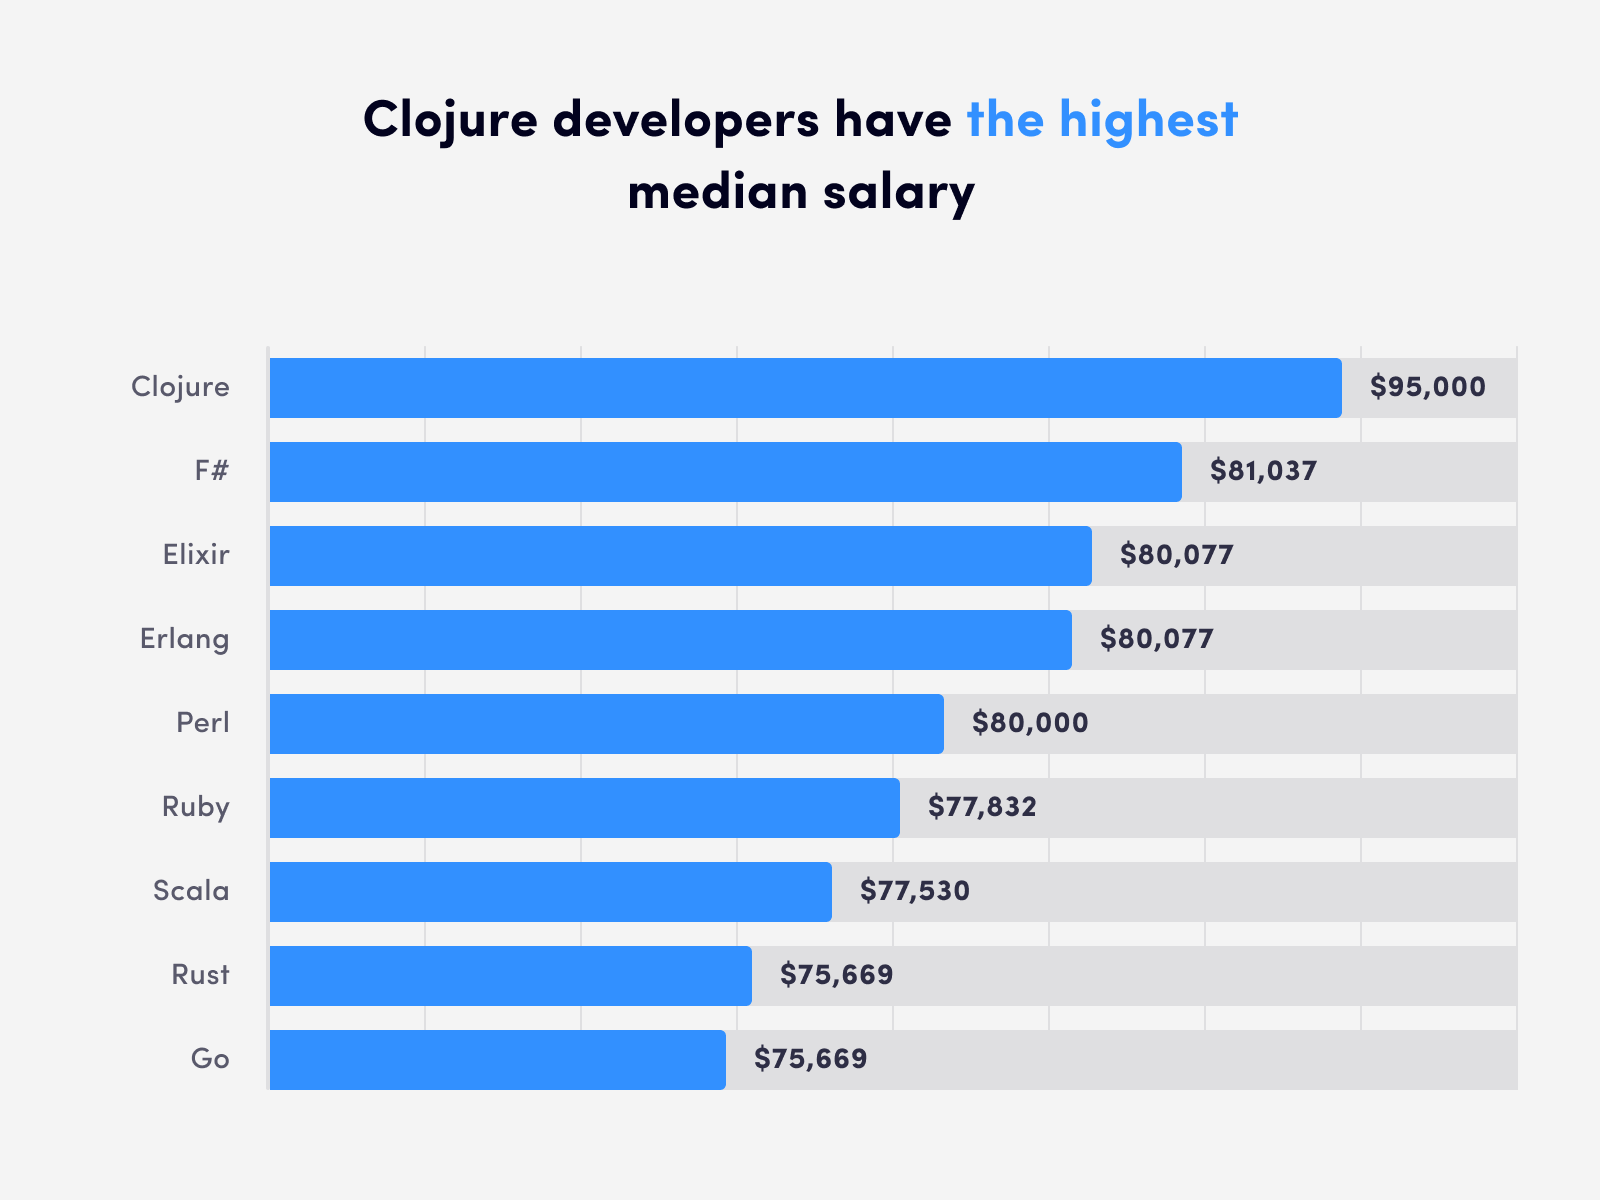 Clojure developers have the highest median salary